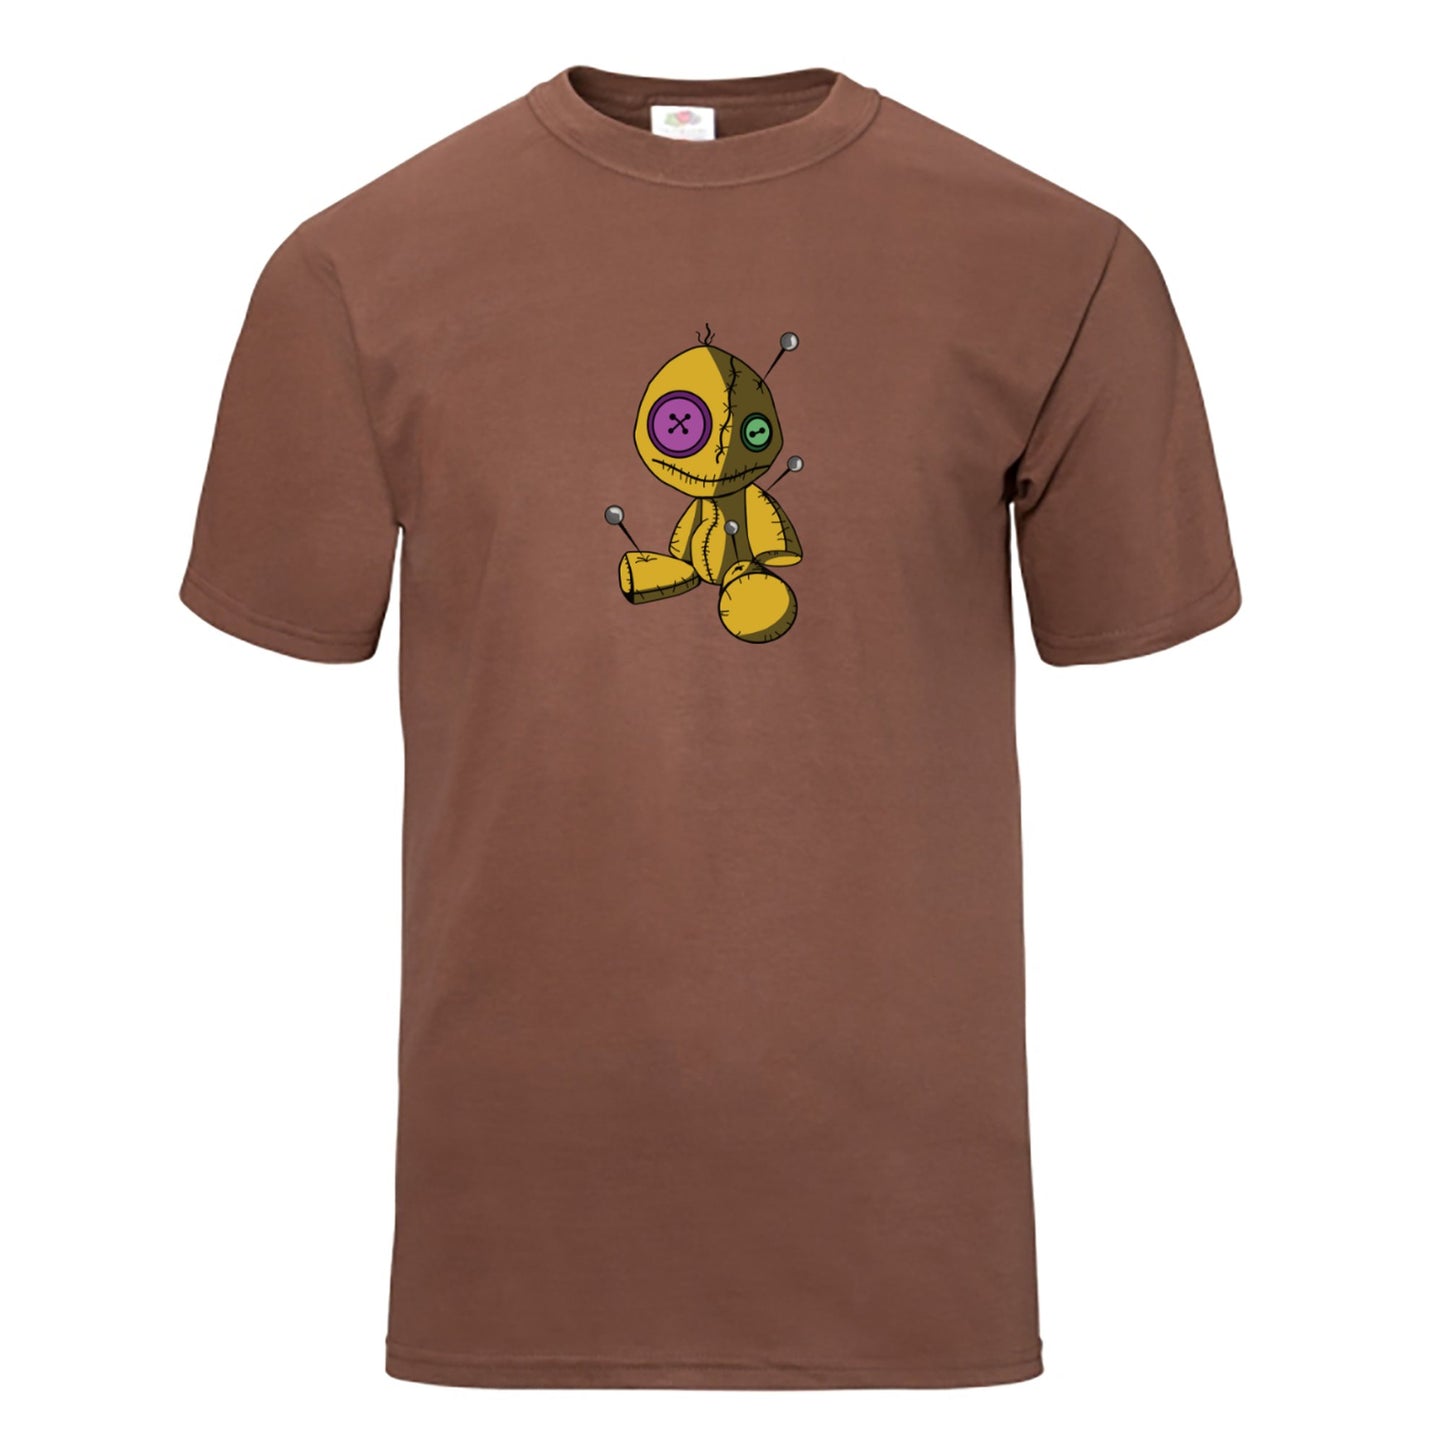 Voodoo Doll Tee Shirt - Hypno Monkey